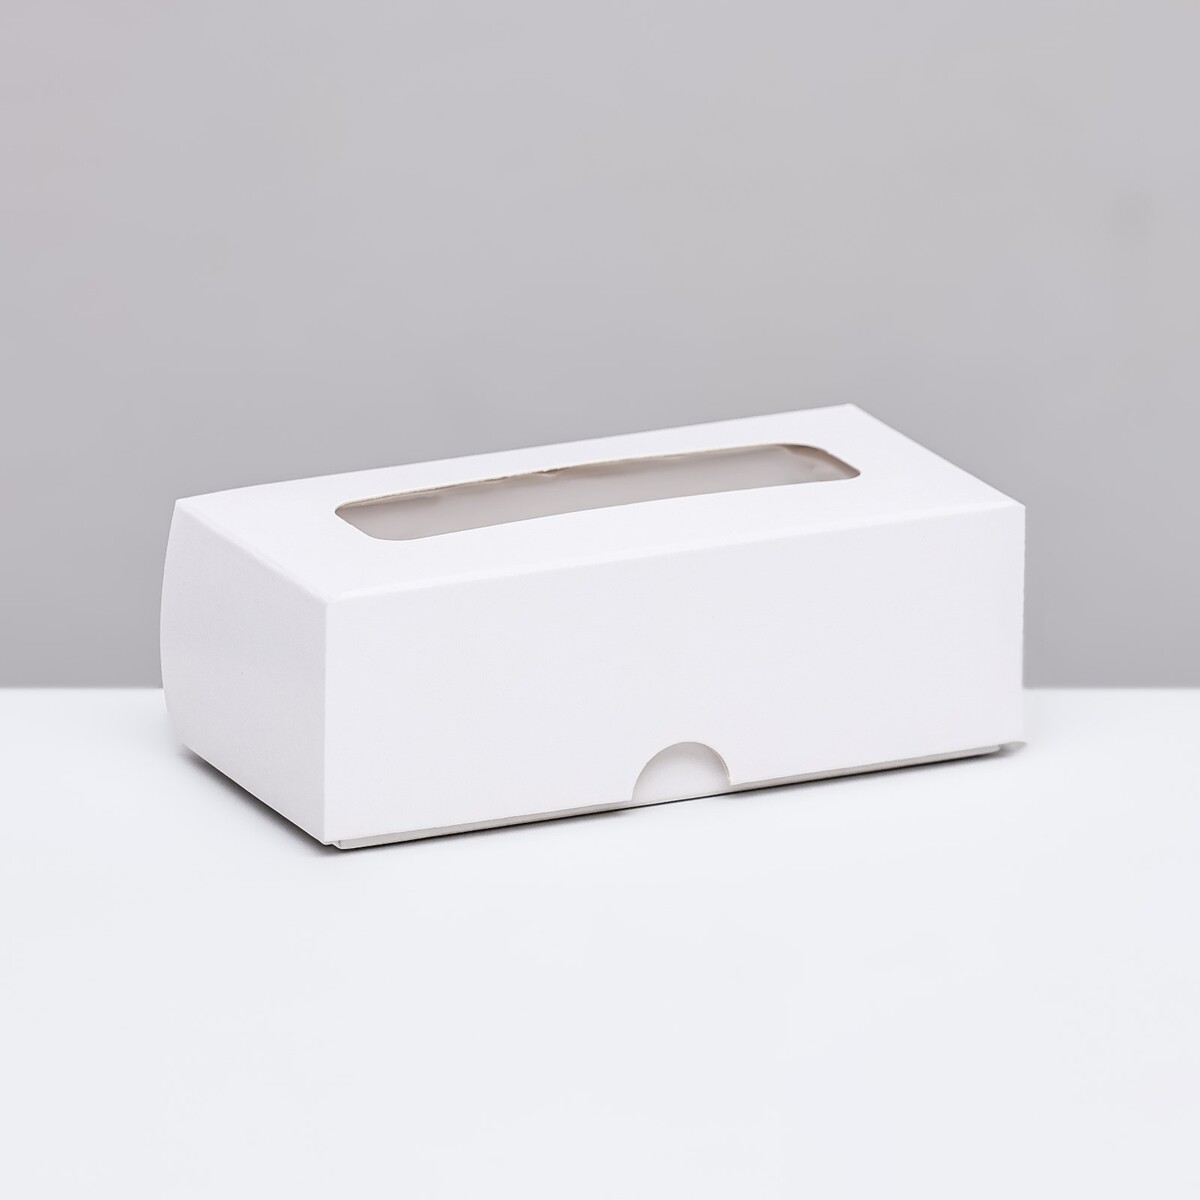 Коробка складная под 2 конфеты, белая, 5 х 10,5 х 3,5 см коробка складная под 25 конфет белая 22 х 22 х 3 3 см